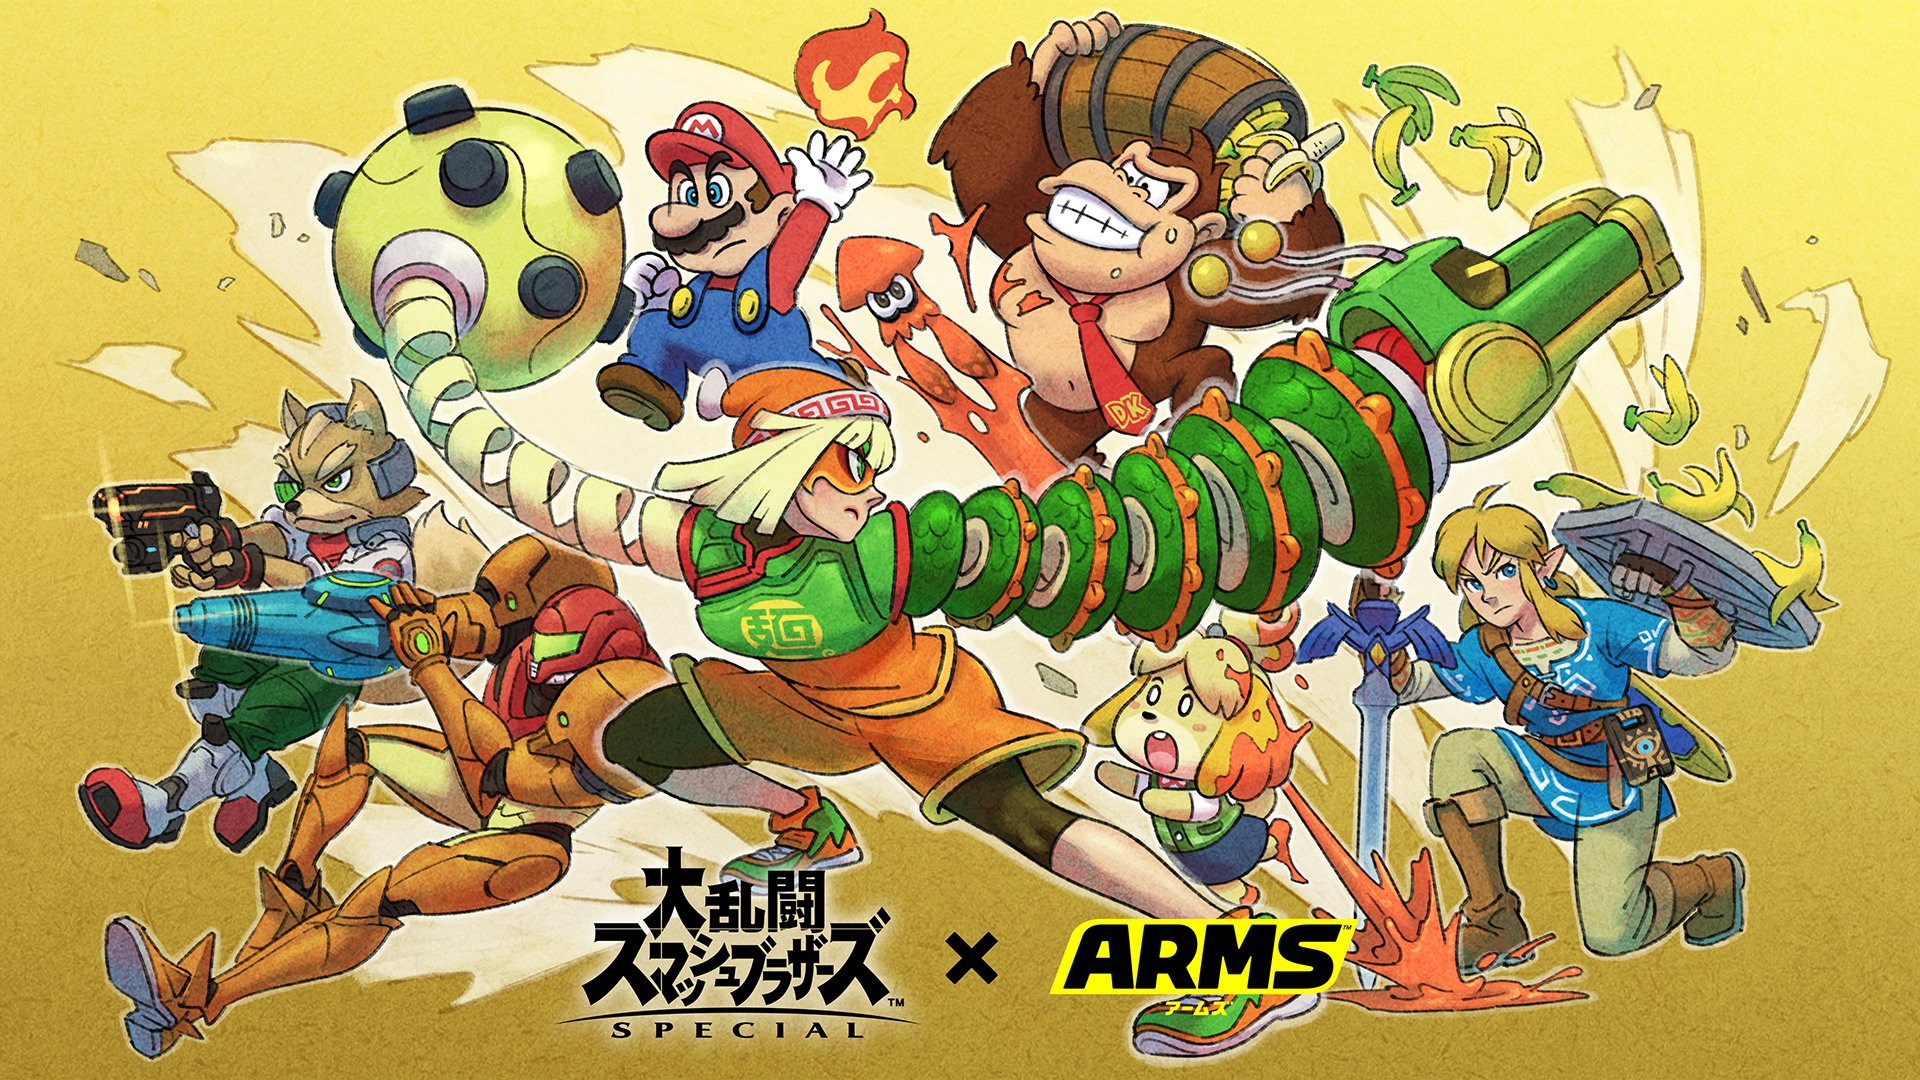 ARMS Dev Celebrates Min Min's Arrival In Smash Ultimate With Some New Artwork